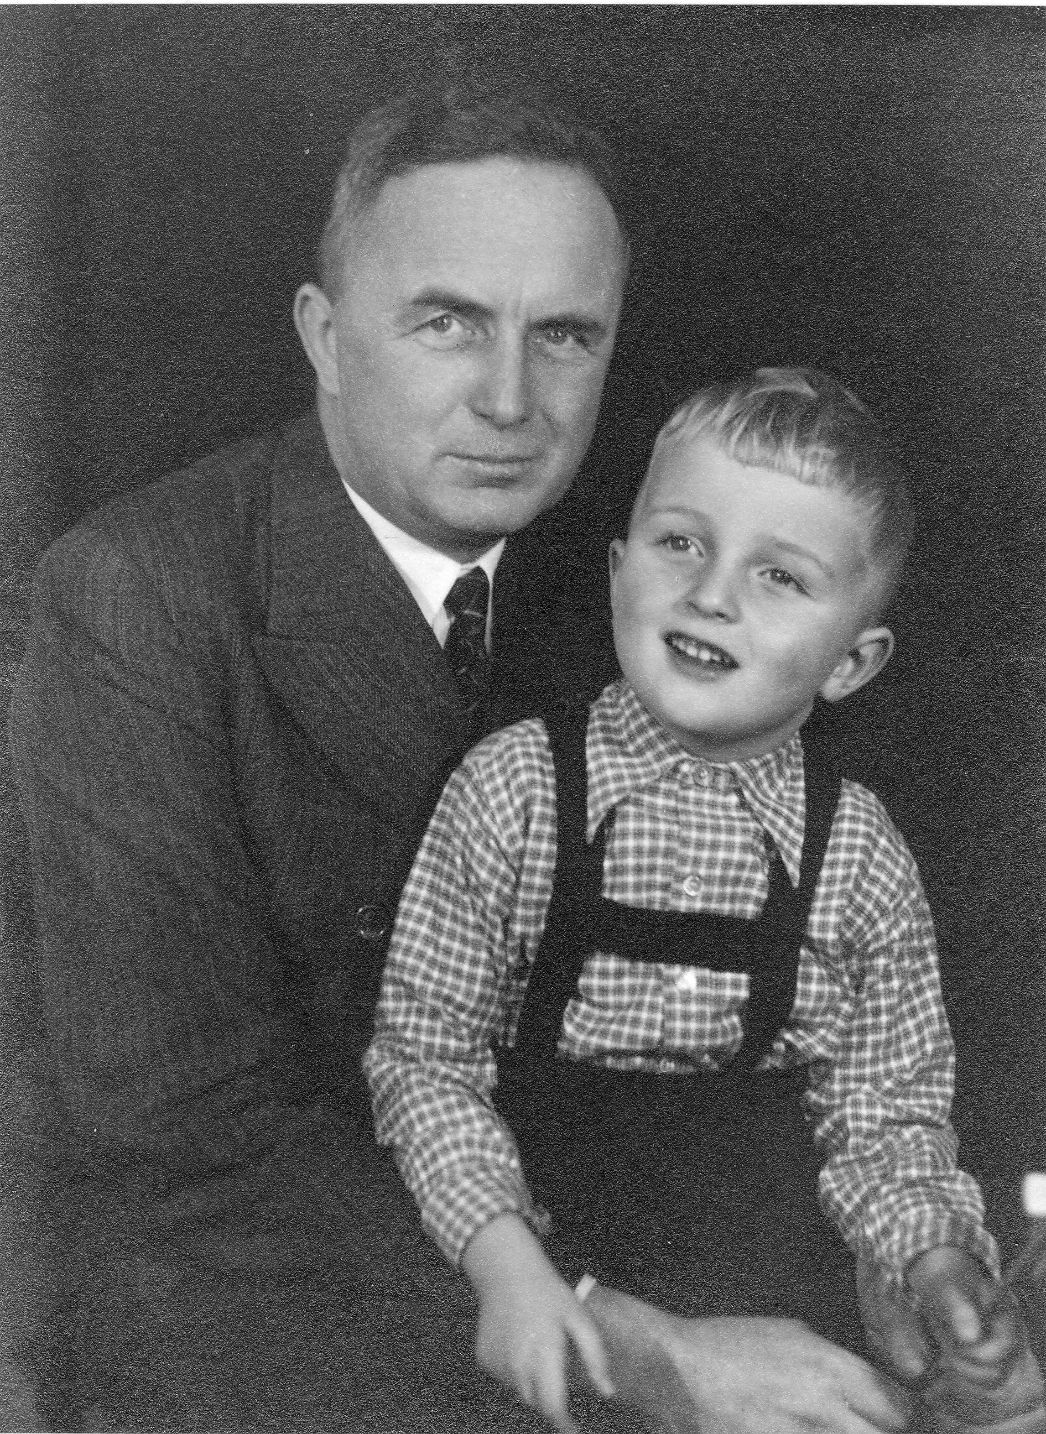 Portrait of Hermann da Fonseca-Wollheim with son